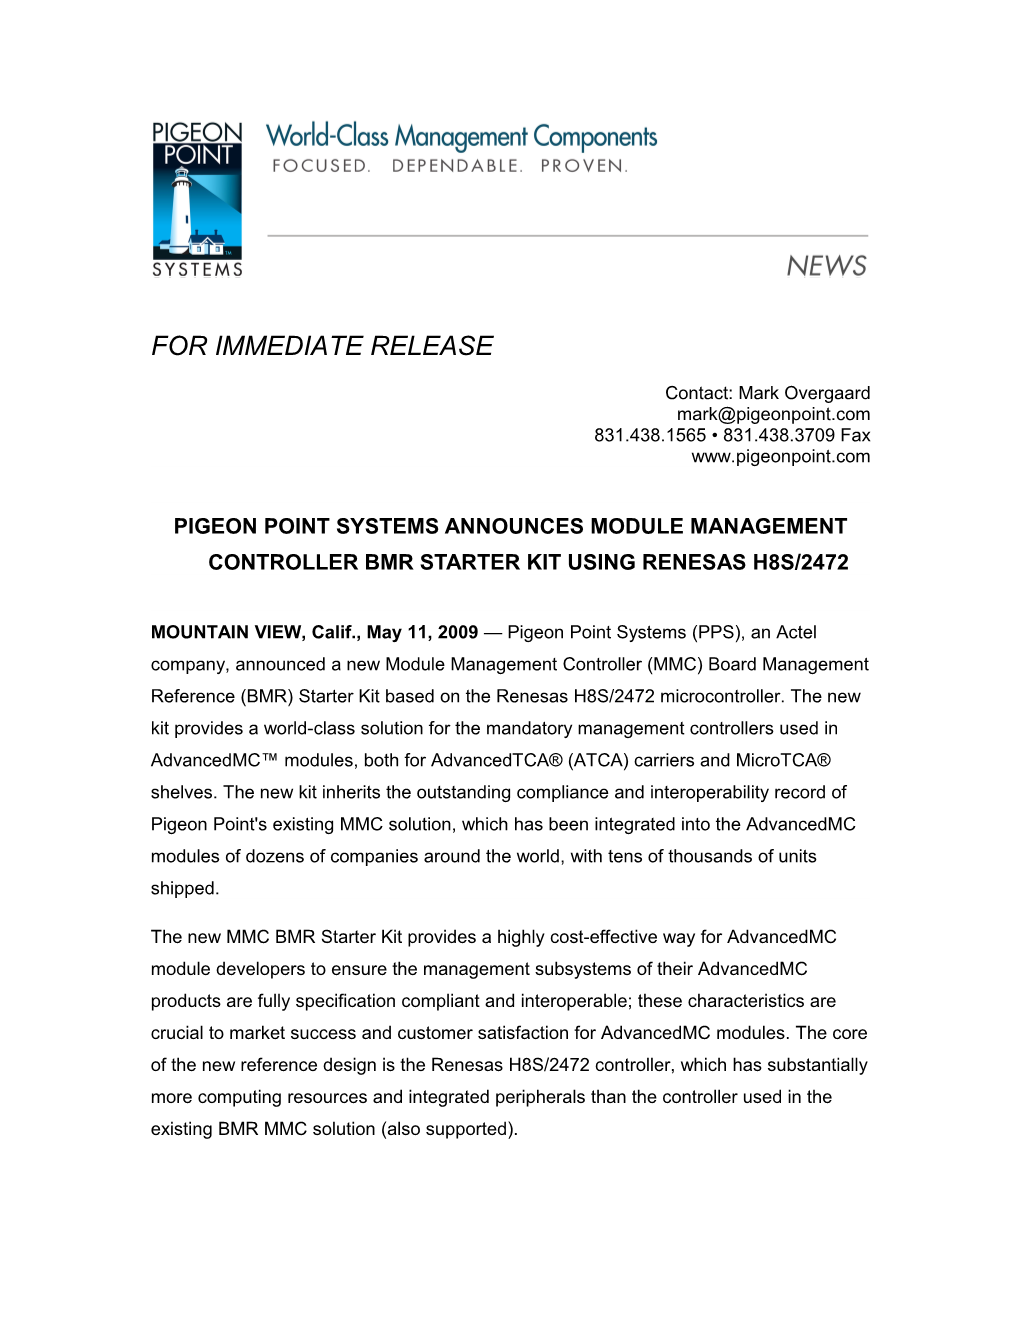 Pigeon Point Systems Announces Module Management Controller BMR Starter Kit Using Renesas